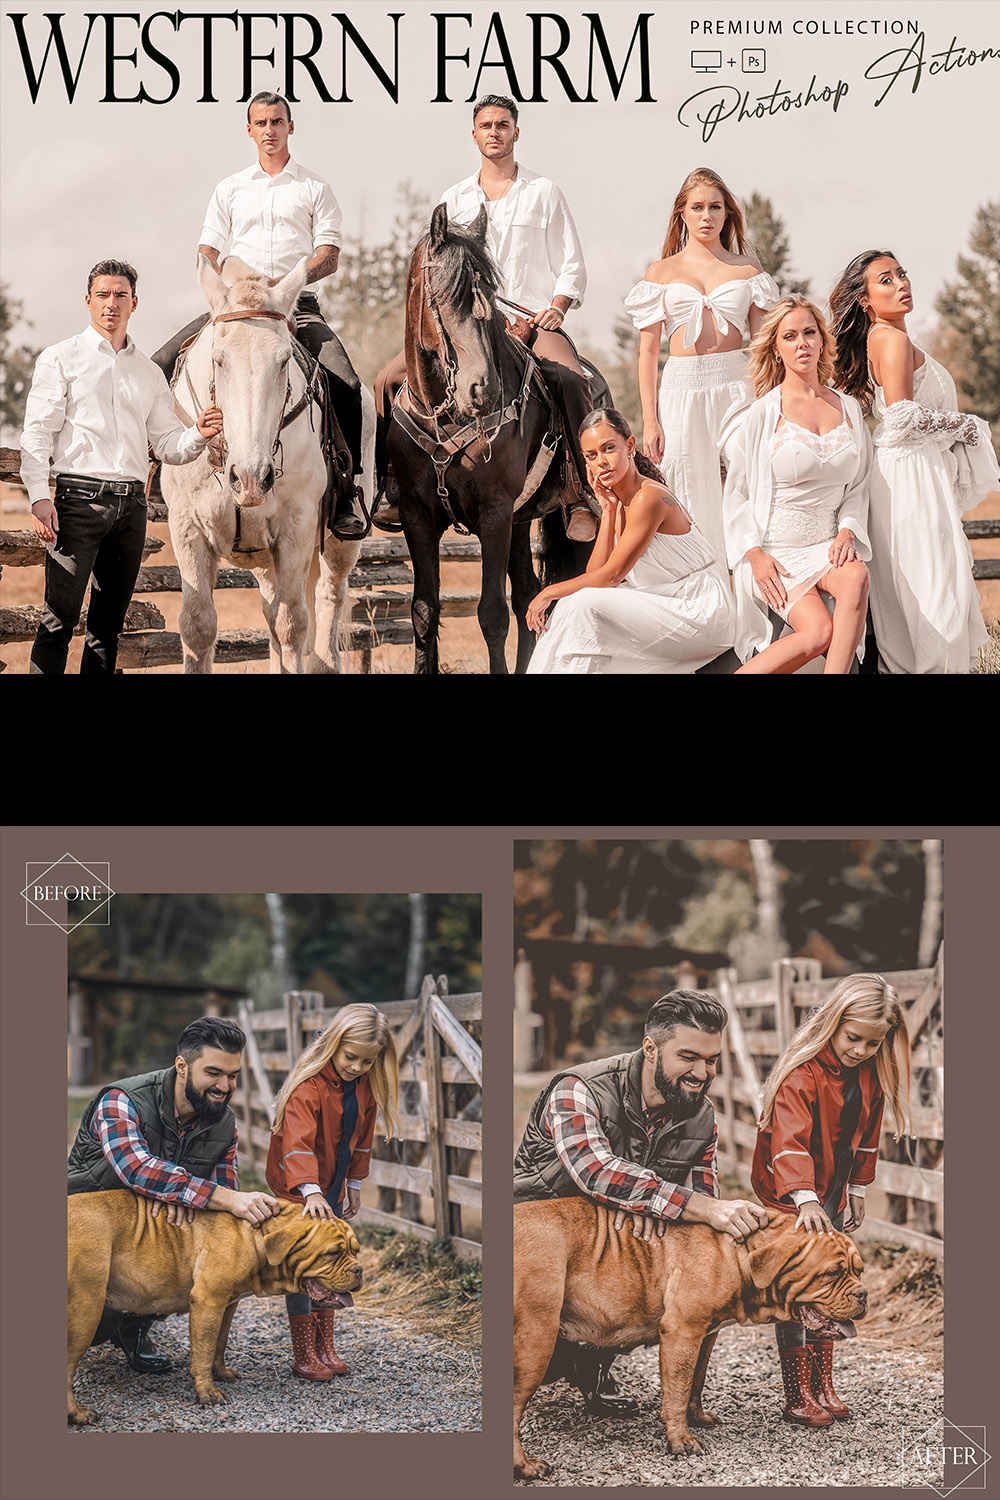 20 Western Farm Photoshop Actions, Color Grad ACR Preset, Rustic Filter, Bronze Theme For Instagram, Blogger, Cowboy pinterest preview image.